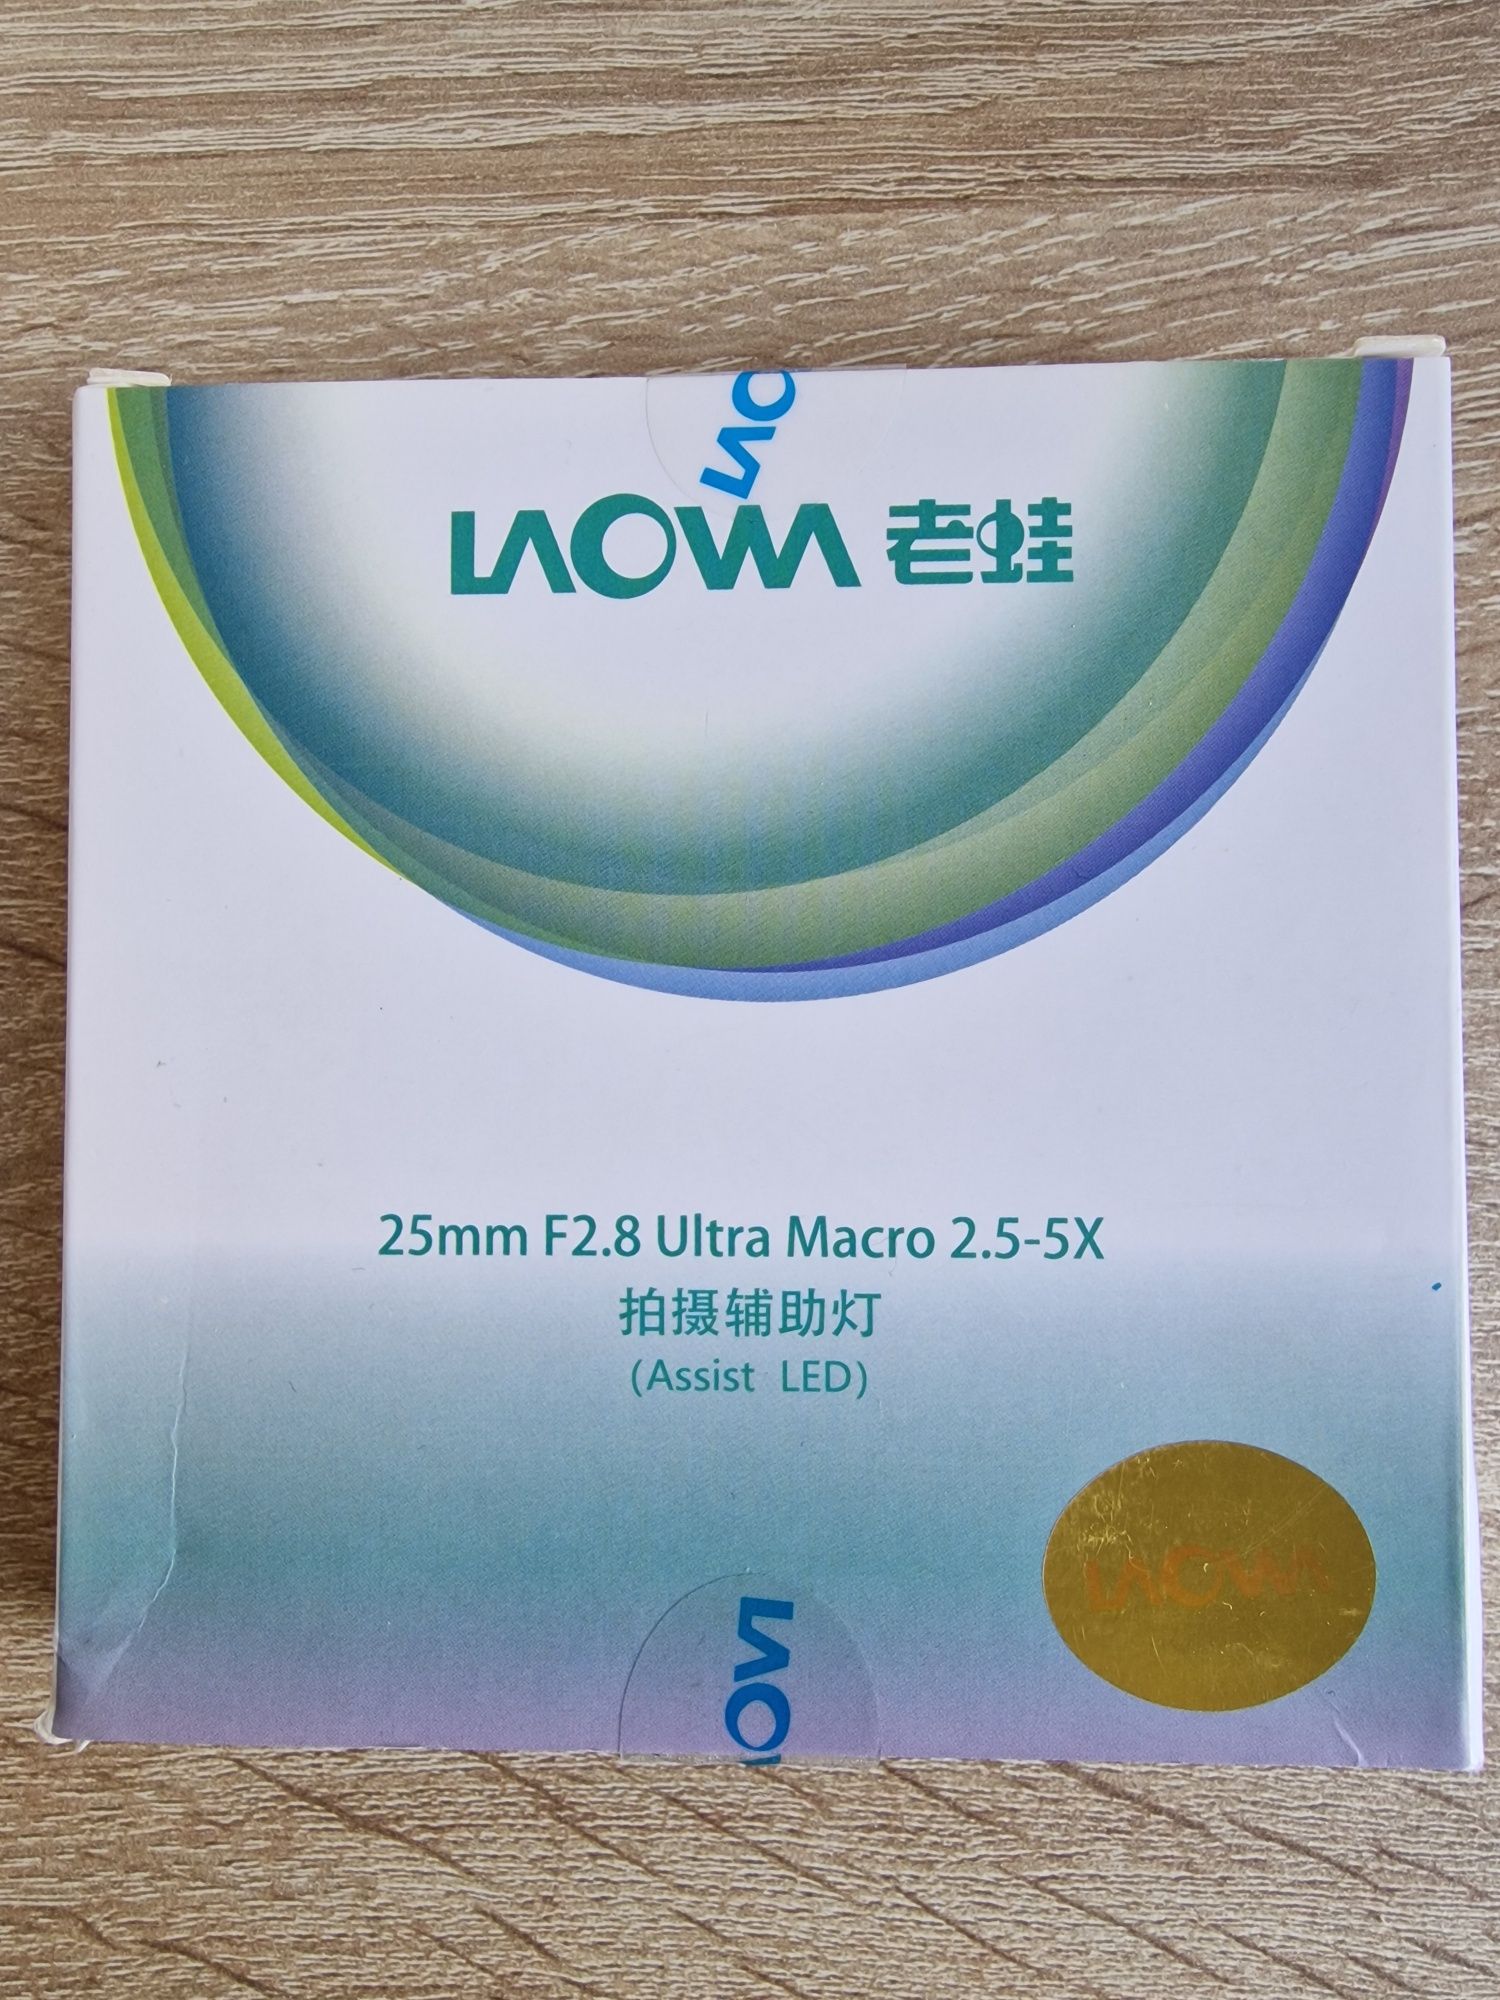 De vanzare Venus Optics Laowa 2.5-5X Ultra-Macro 25mm f/2.8 Nikon F